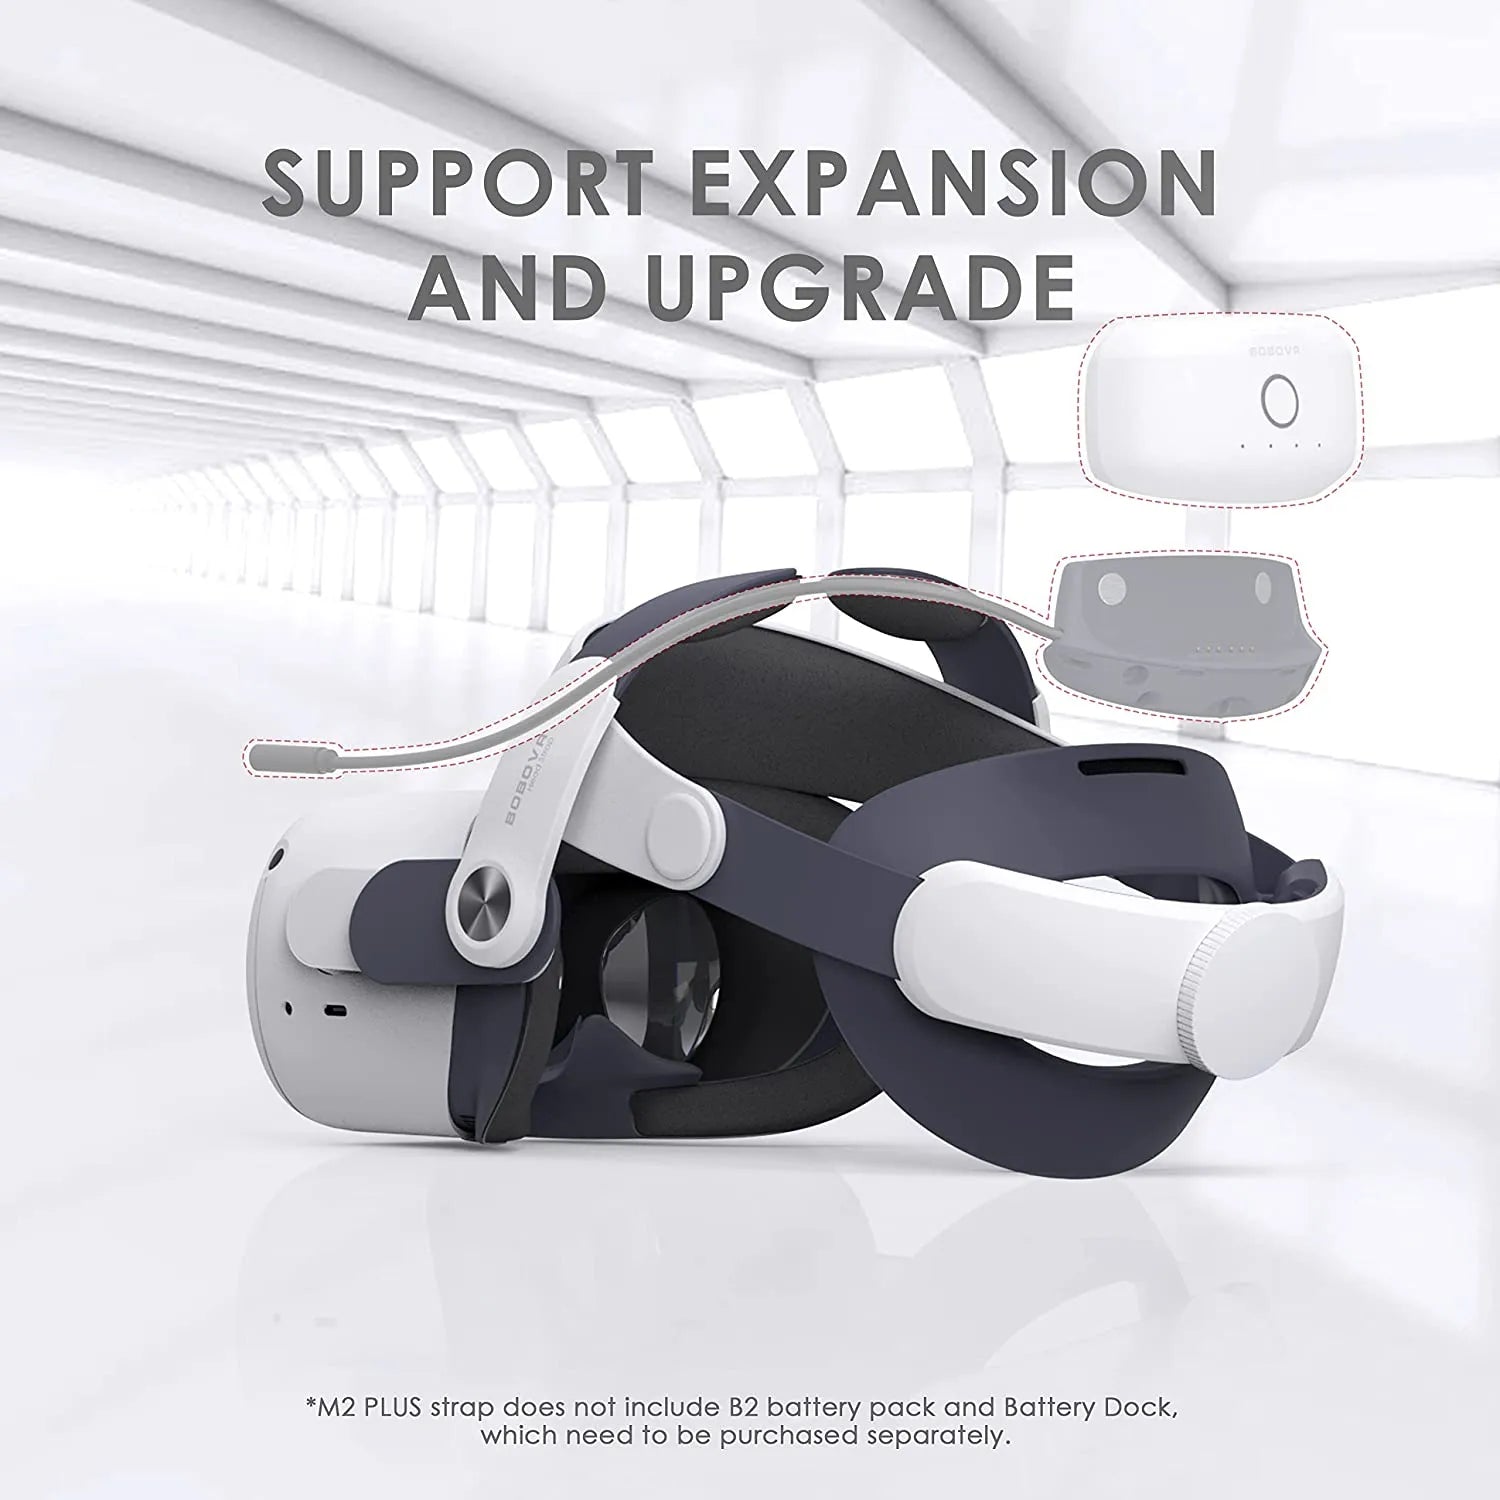 BOBOVR M2 Plus Head Strap for Quest 2 Enhanced Comfort & Reduce Facial Stress - product details support expansion - b.savvi